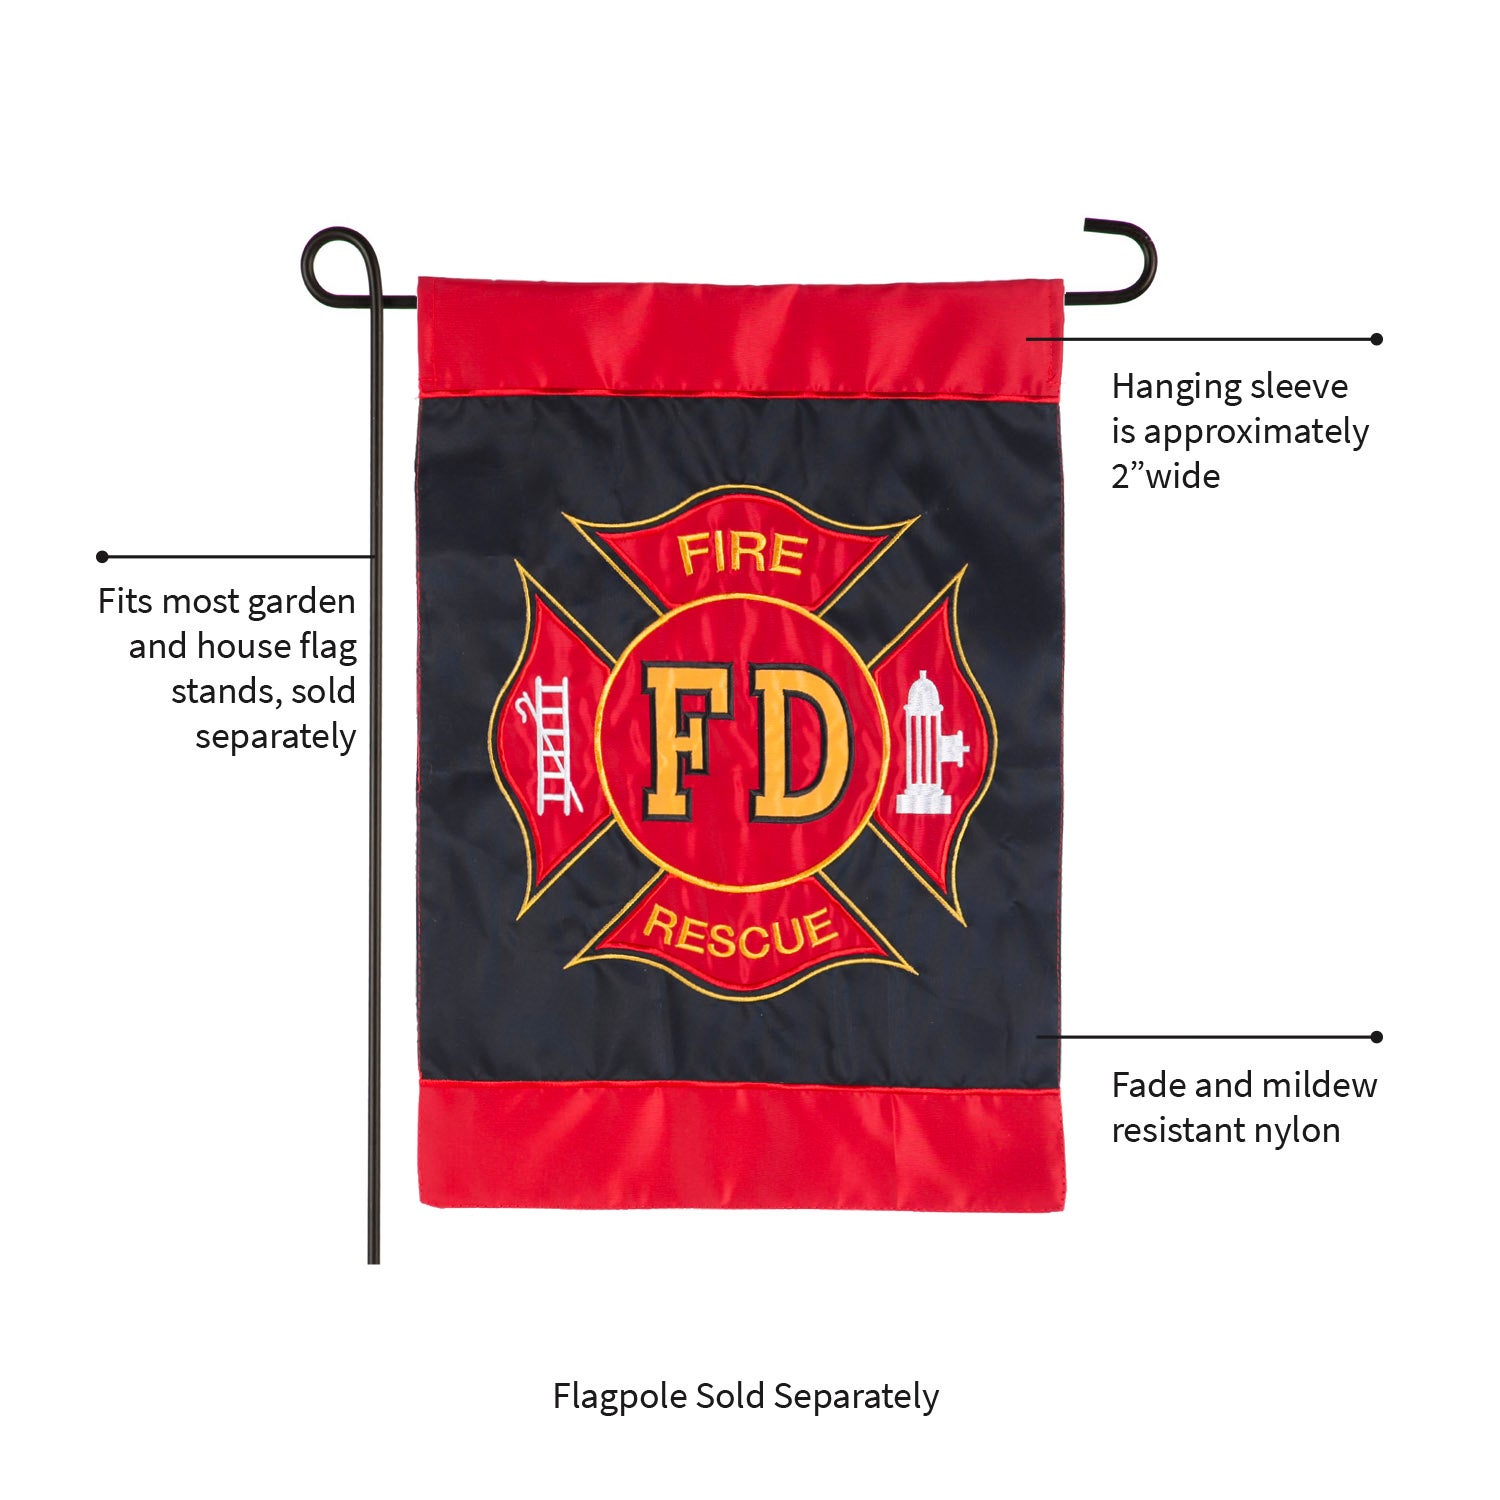 Fire Department Applique Garden Flag